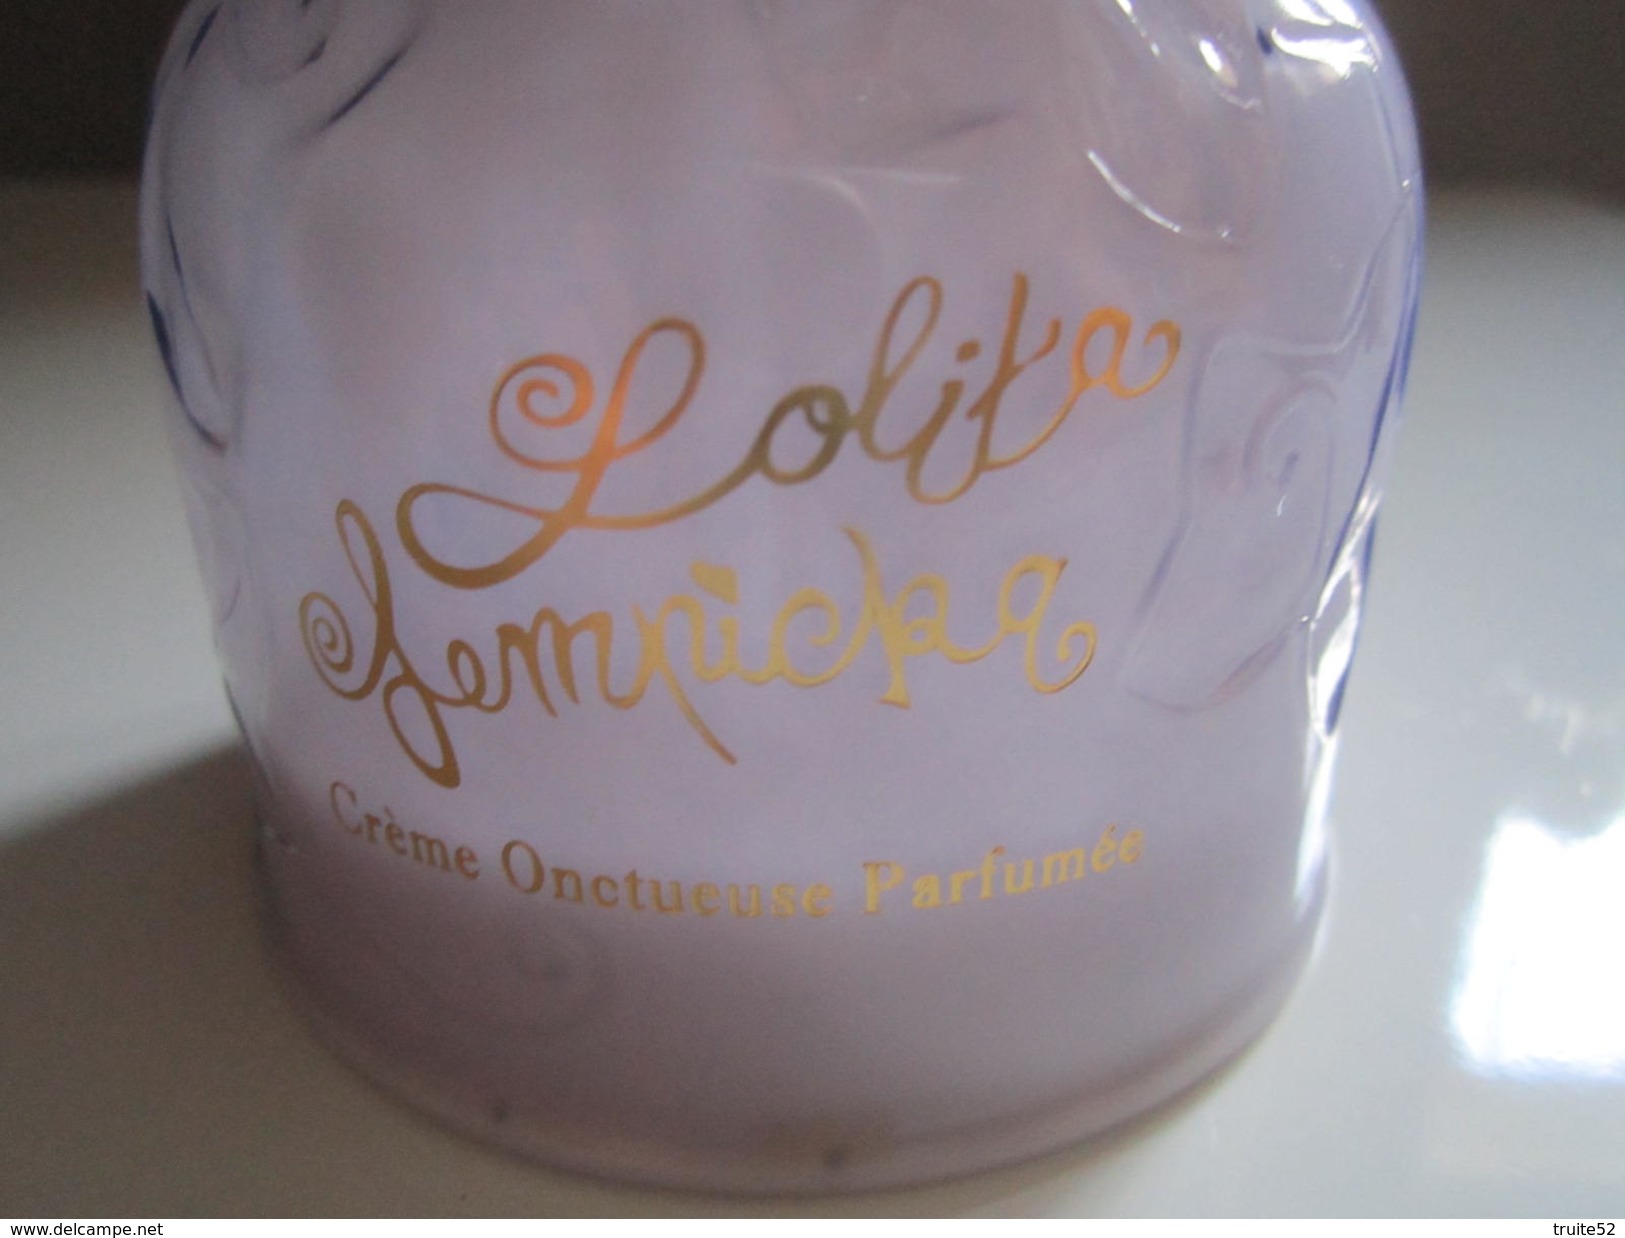 Le Premier Parfum Crème Onctueuse PARFUMEE 300 Ml LOLITA LEMPICKA - Frascos (vacíos)